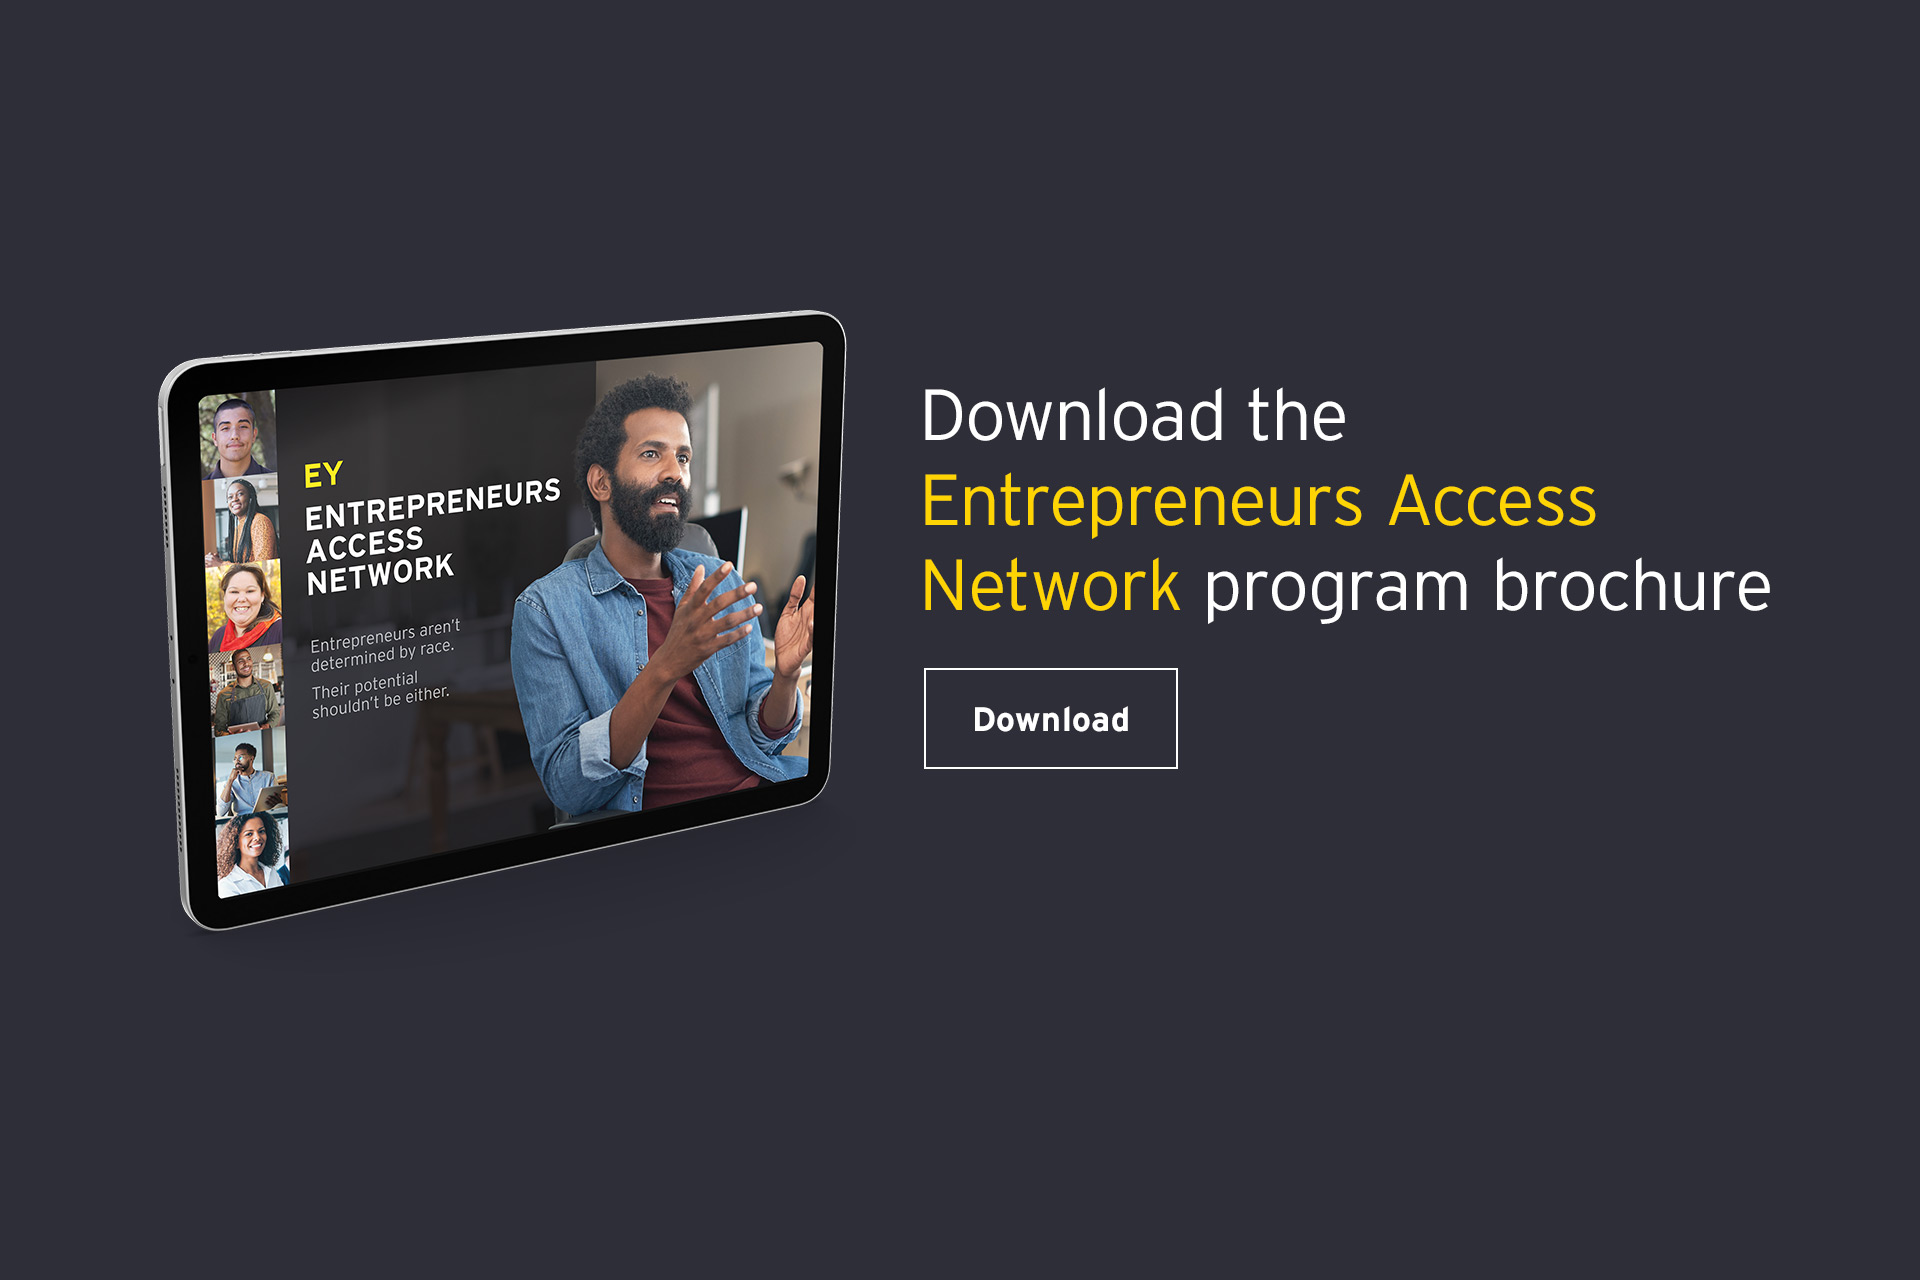 Download the EY Entrepreneurs Access Network program brochure